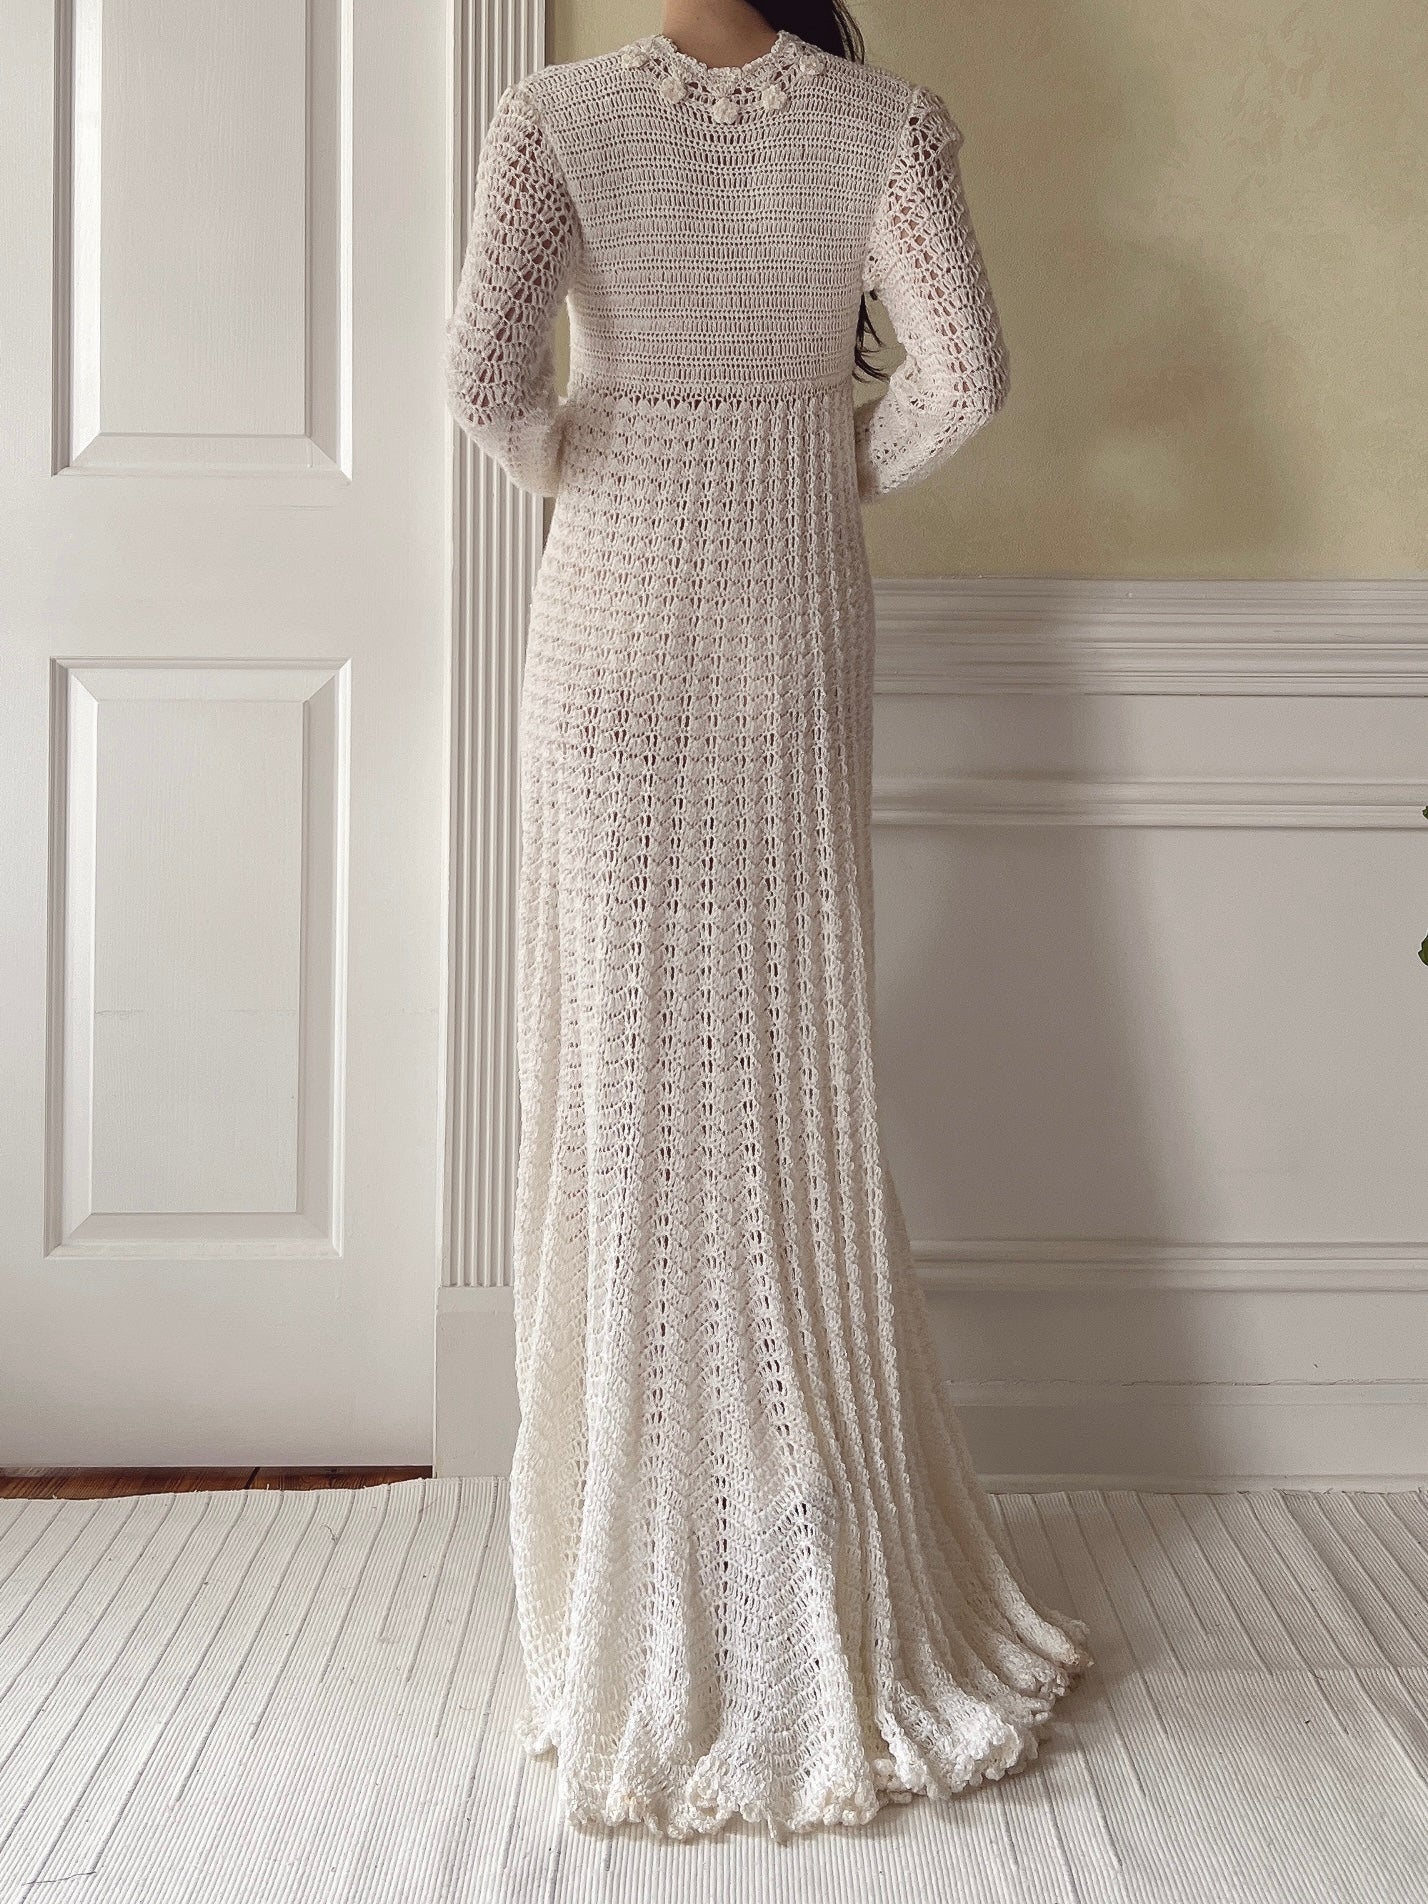 Vintage Knit Crochet Dress - XS-M